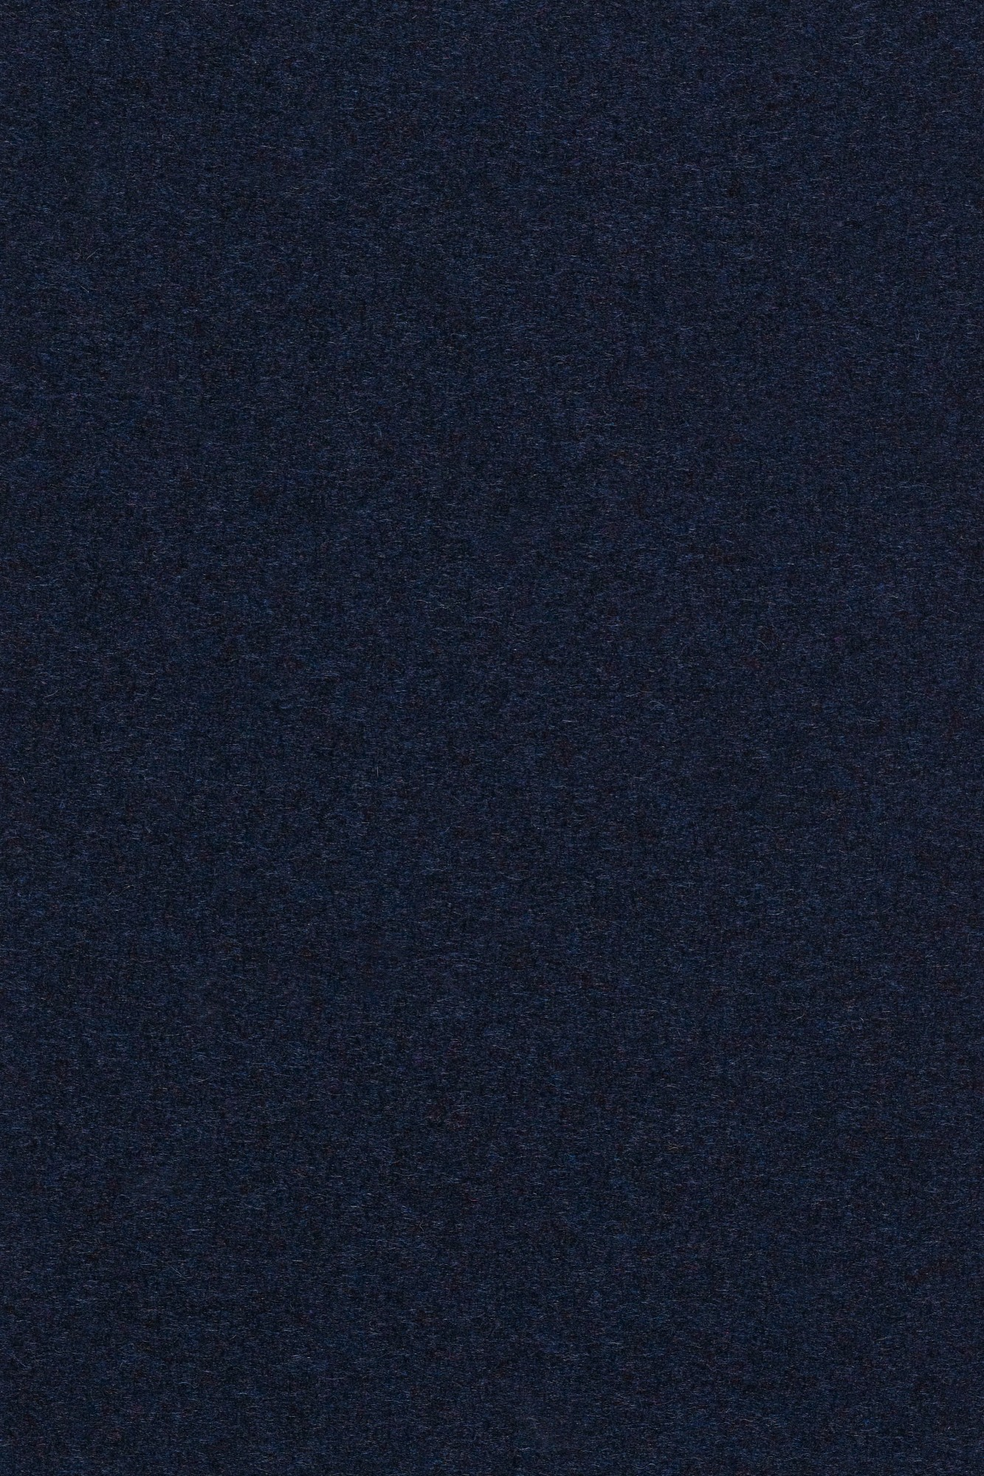 Fabric sample Divina MD 783 blue